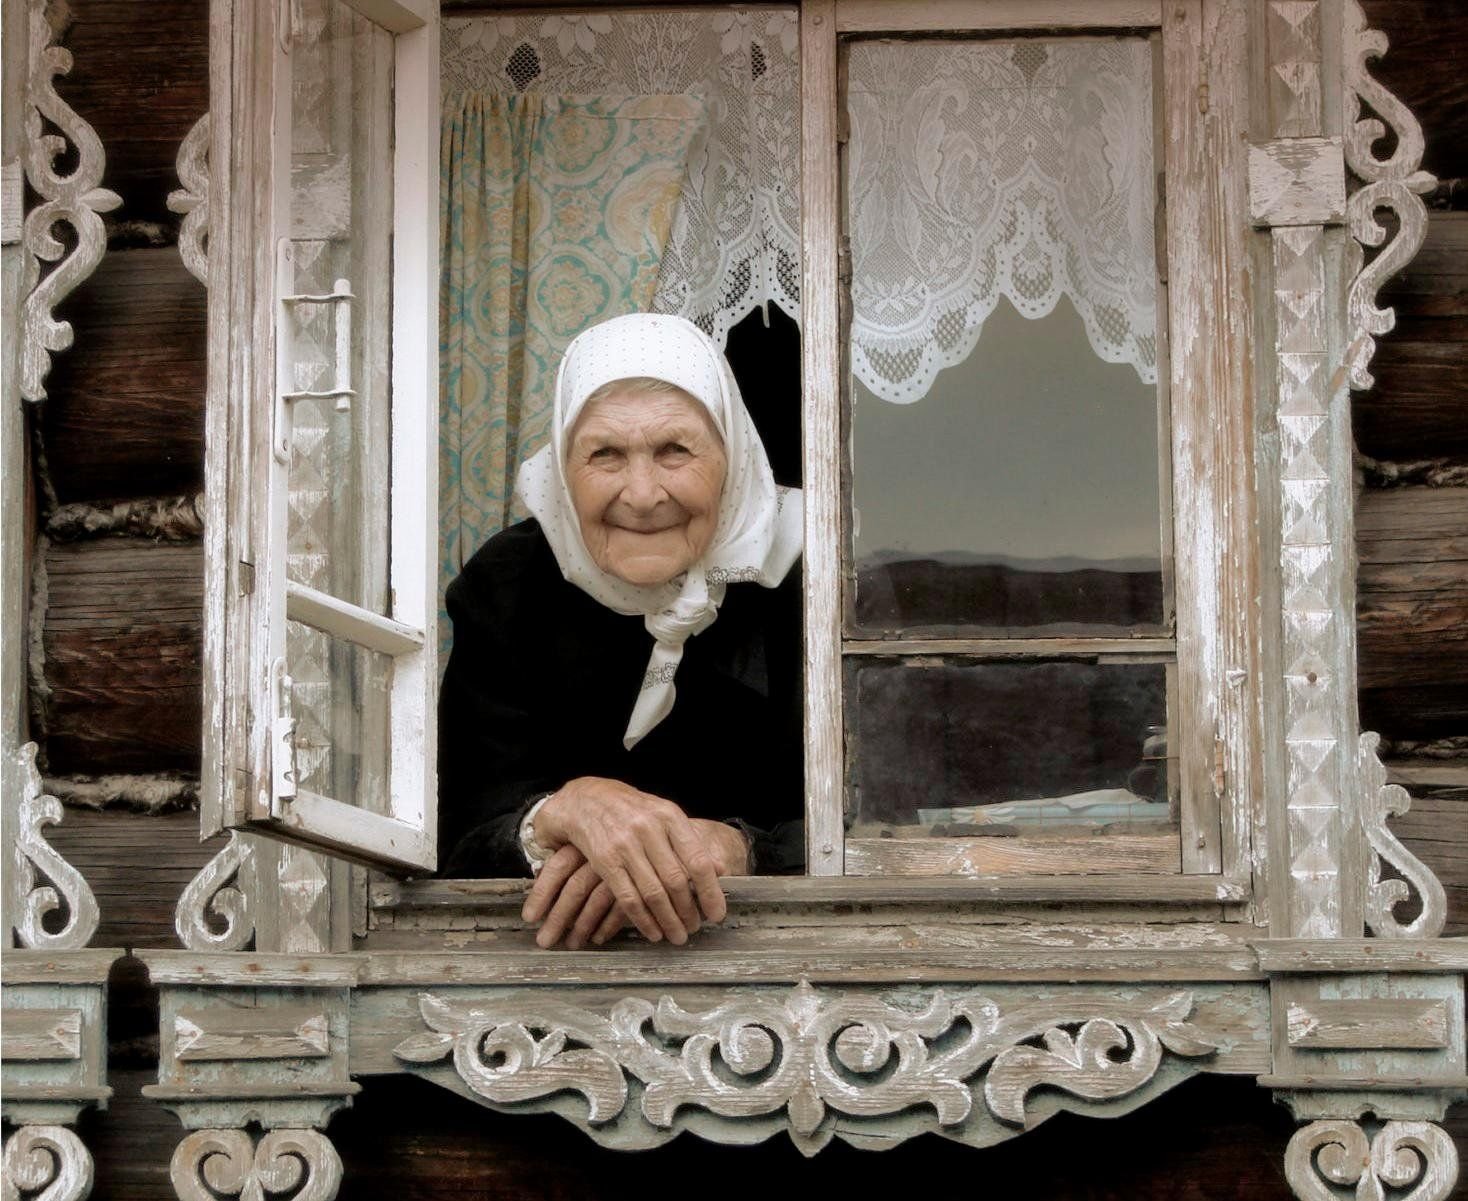 К чему снятся покойники живыми бабушка. Бабушка у окна. Бабушка в окошке. Старушка у окна. Старушка у окна в деревне.